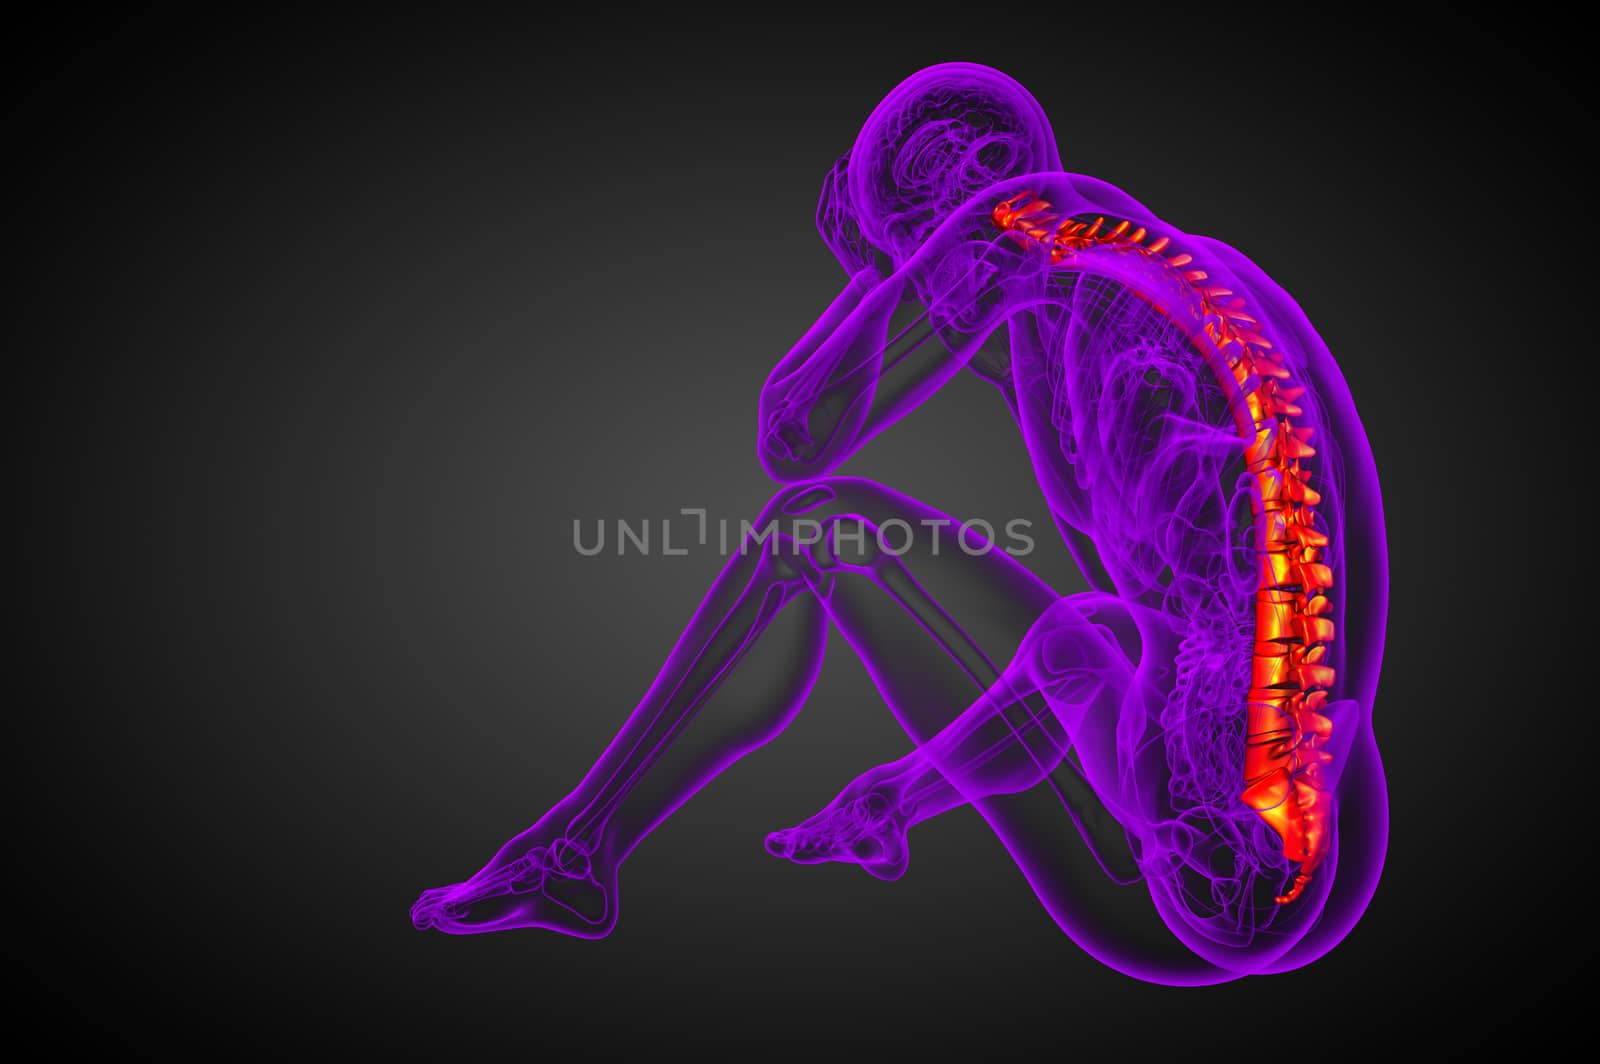 3d render medical illustration of the human spine  by maya2008